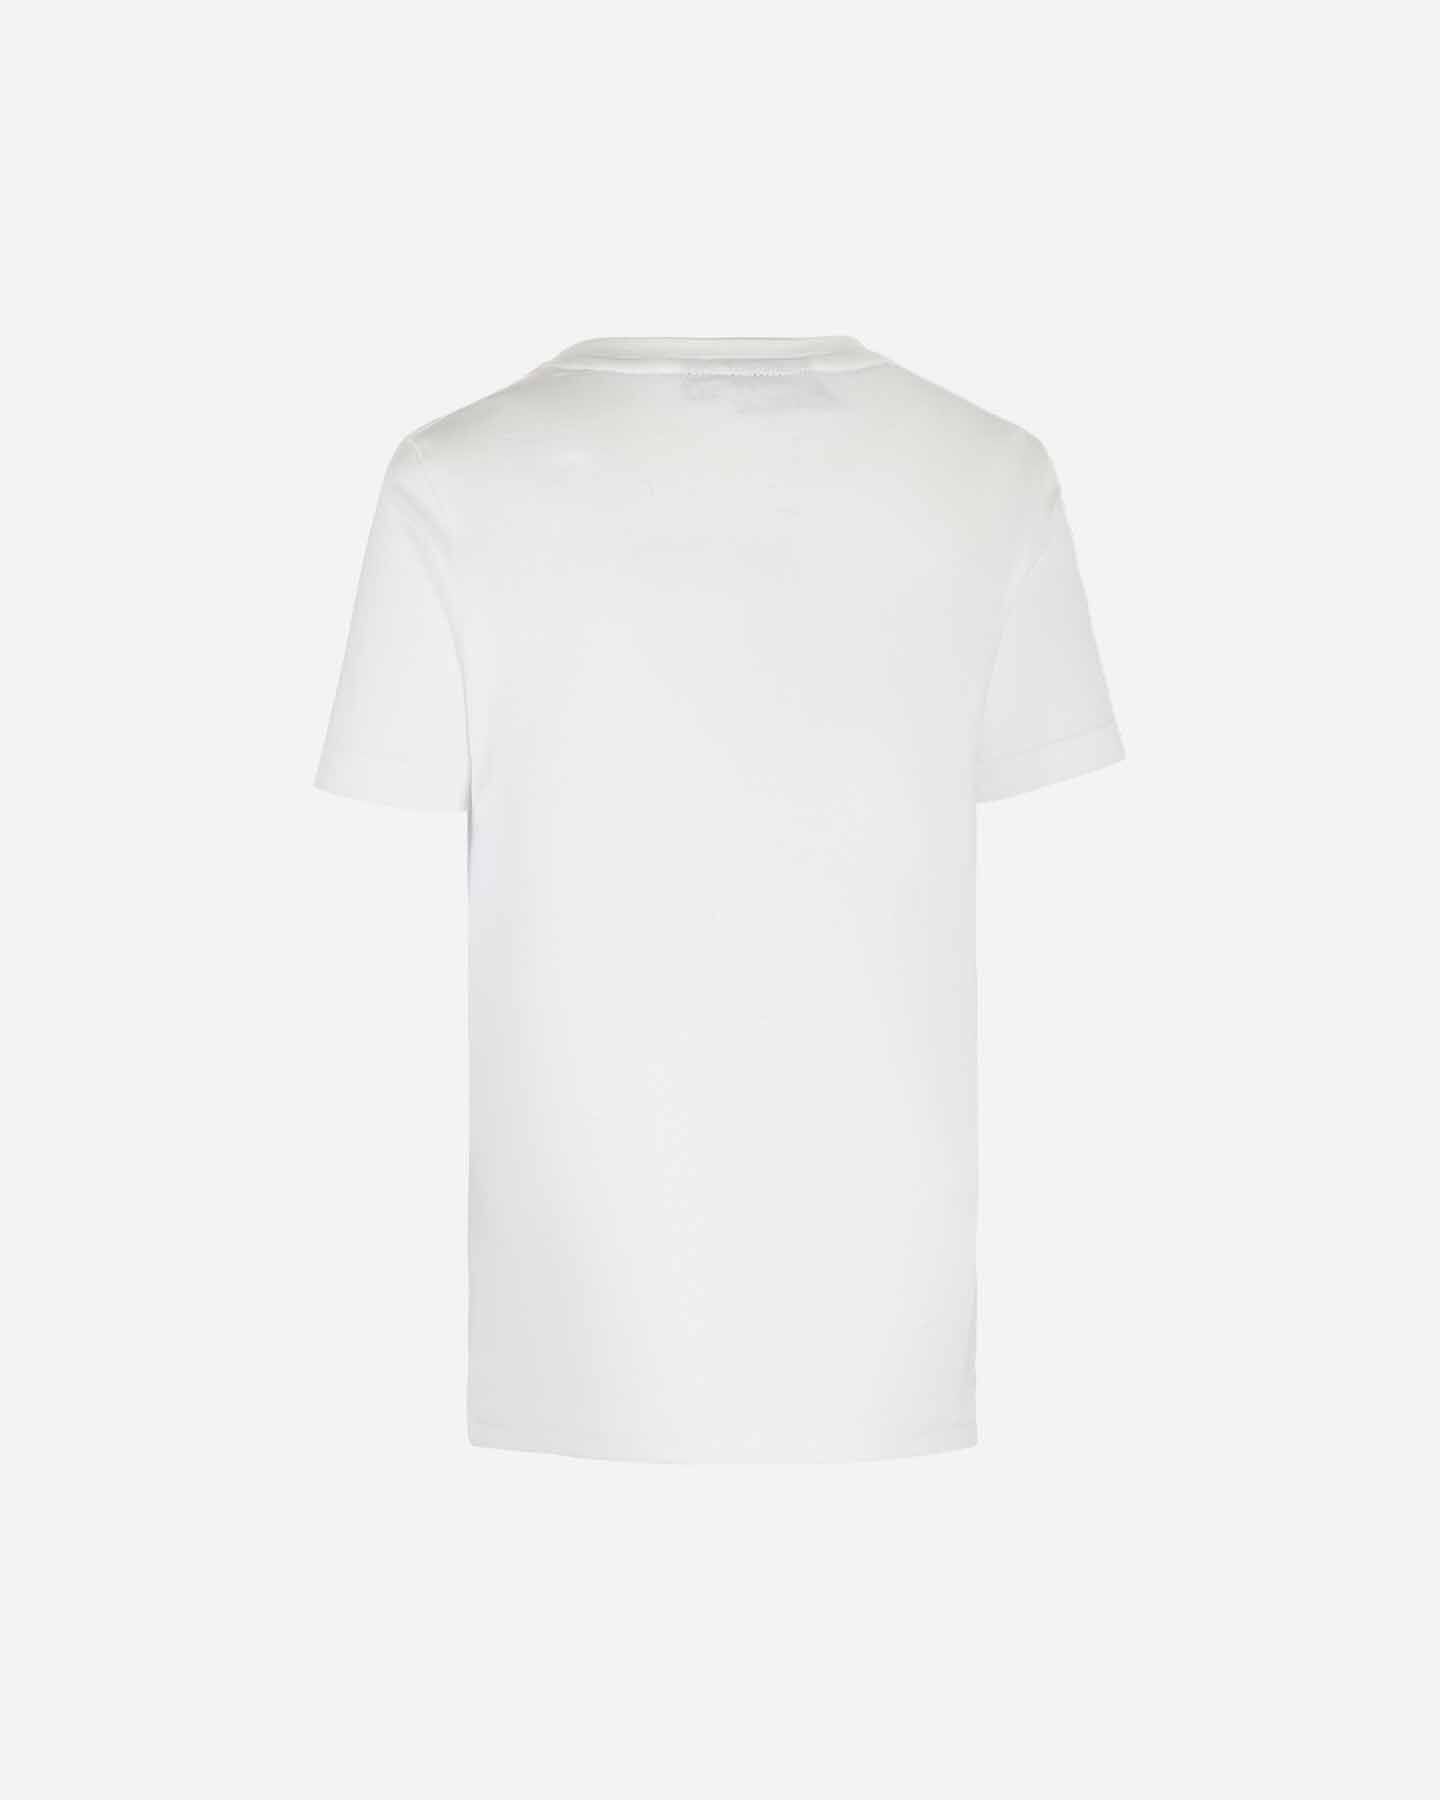  T-Shirt BEAR LOGO JR S4071127|0100|6A scatto 1